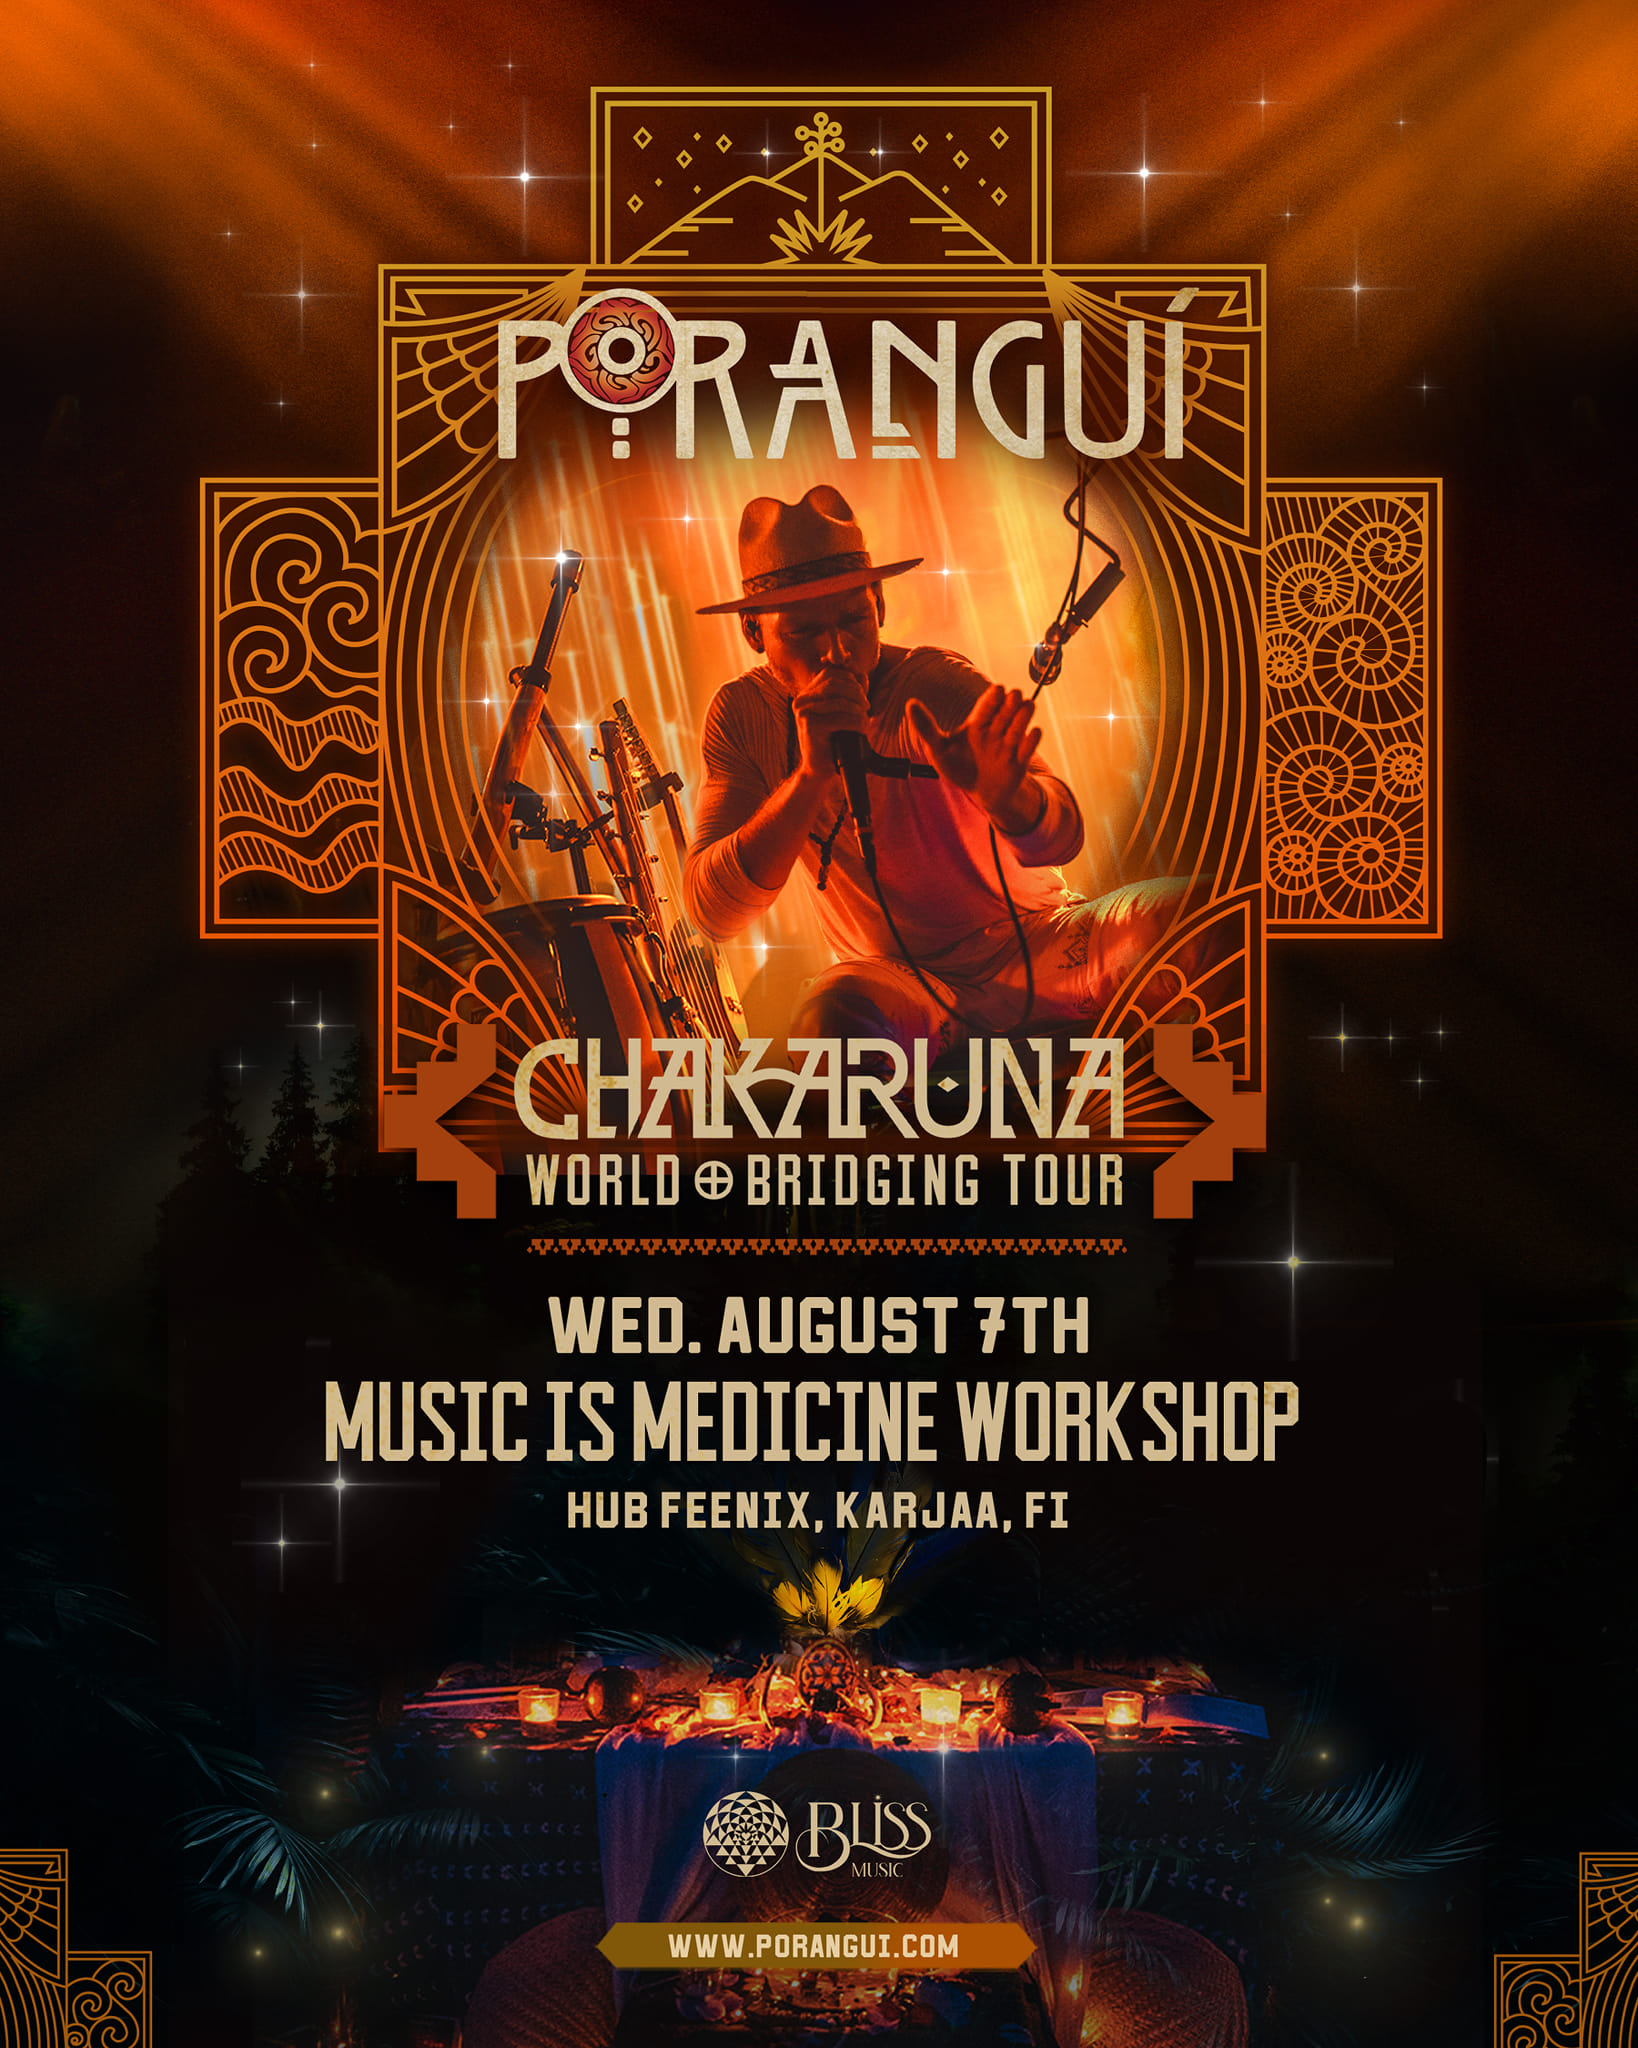 Music Is Medicine - Poranguí @ Hub Feenix